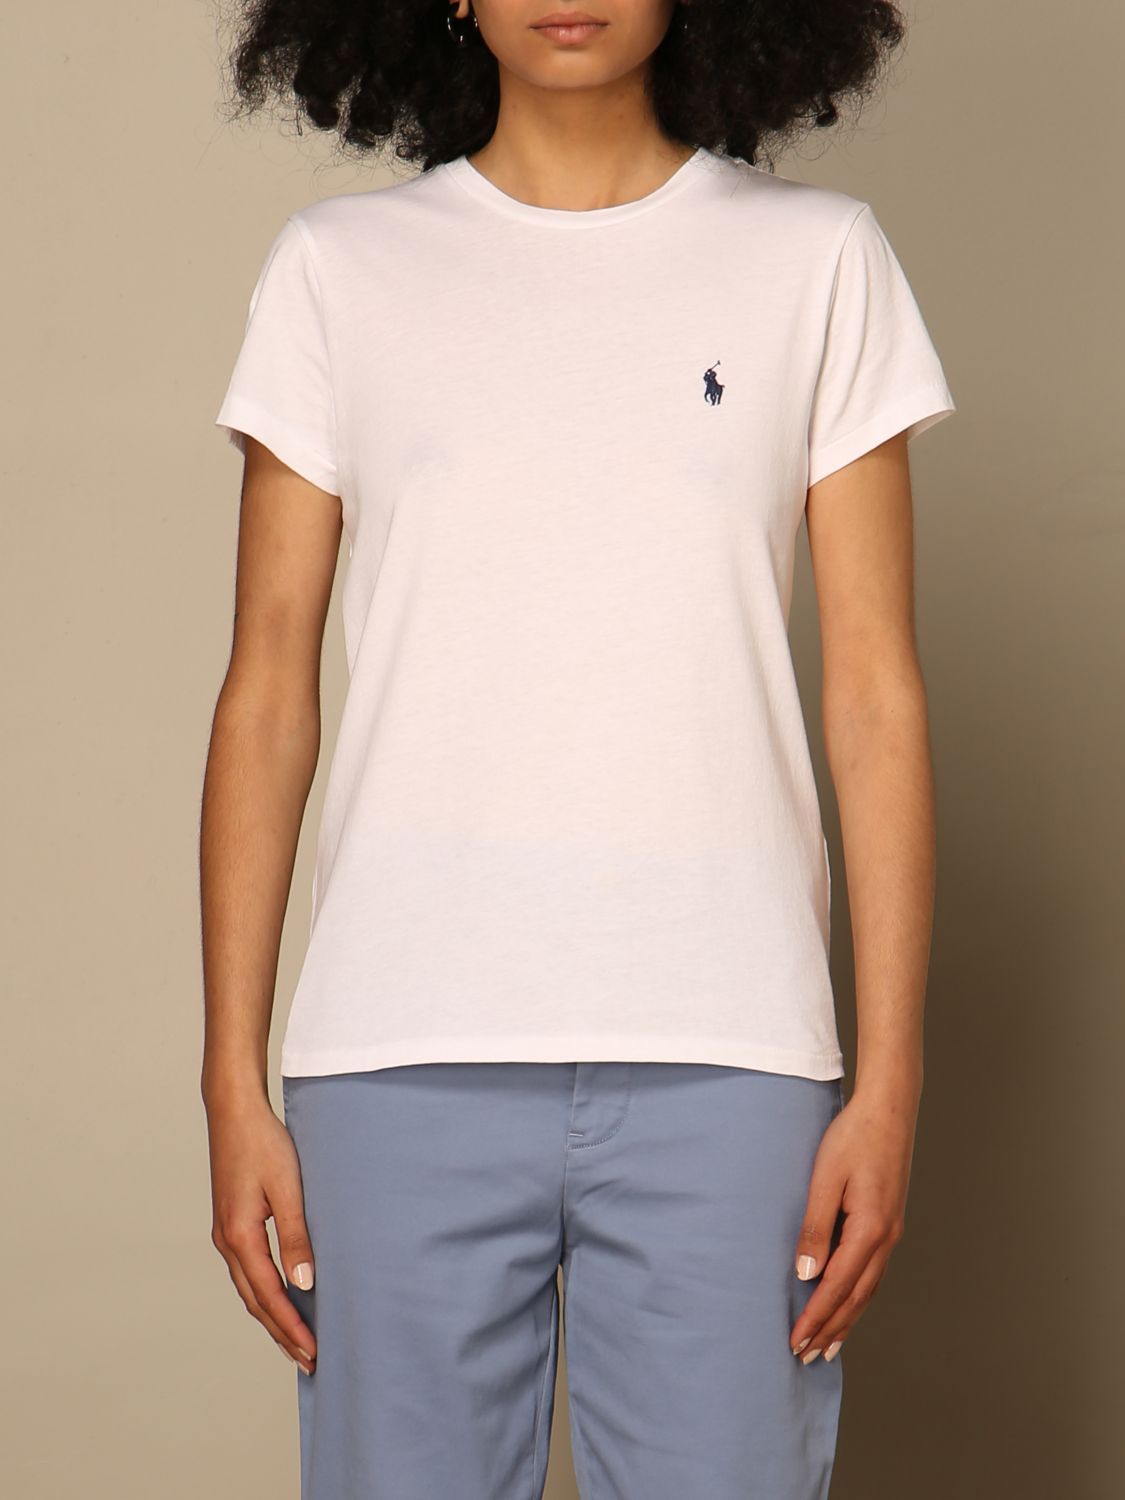 POLO RALPH LAUREN: cotton t-shirt with logo - White | Polo Ralph Lauren ...